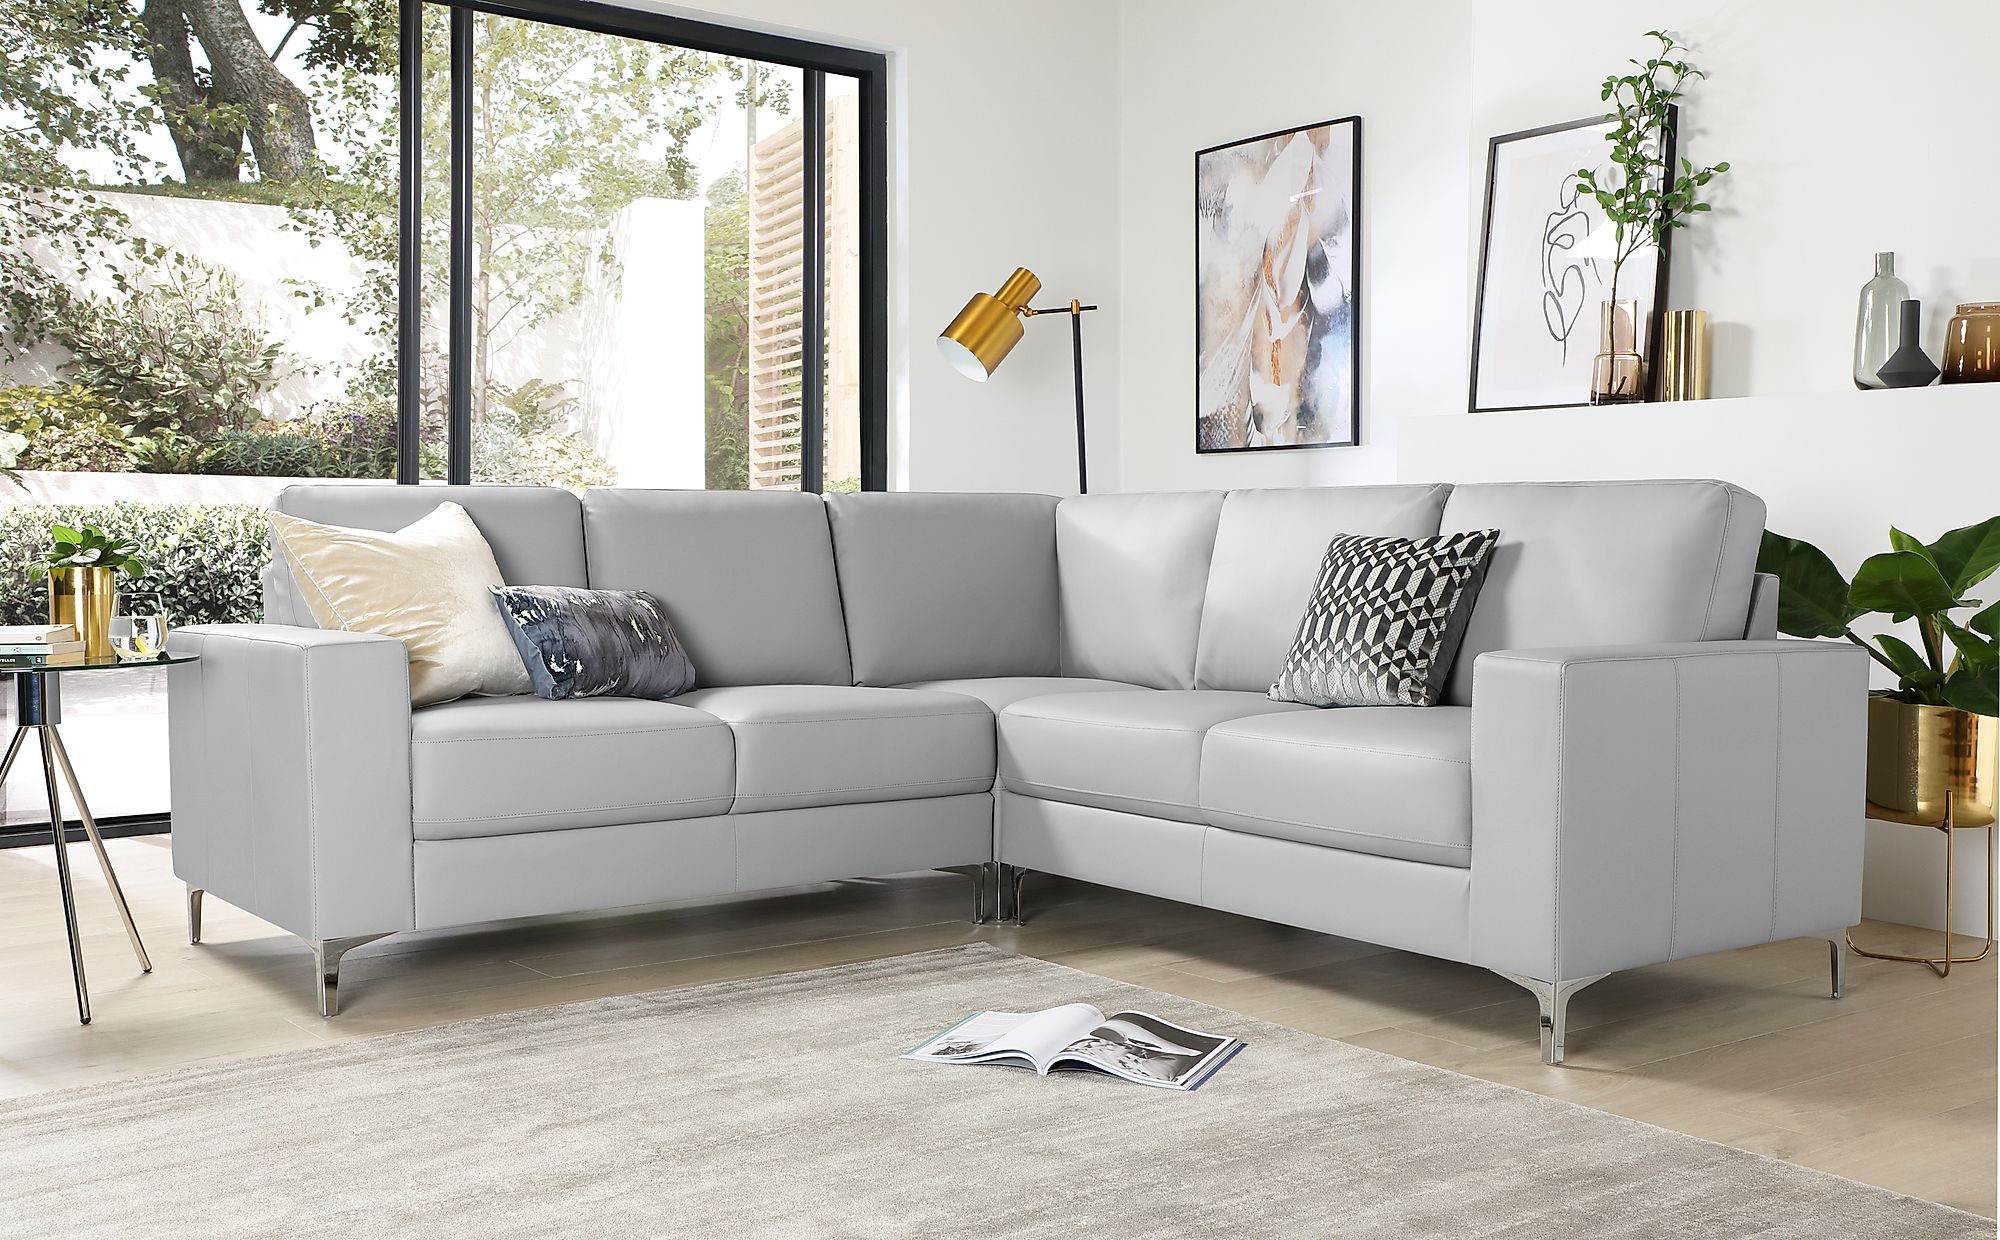 pale grey leather corner sofa